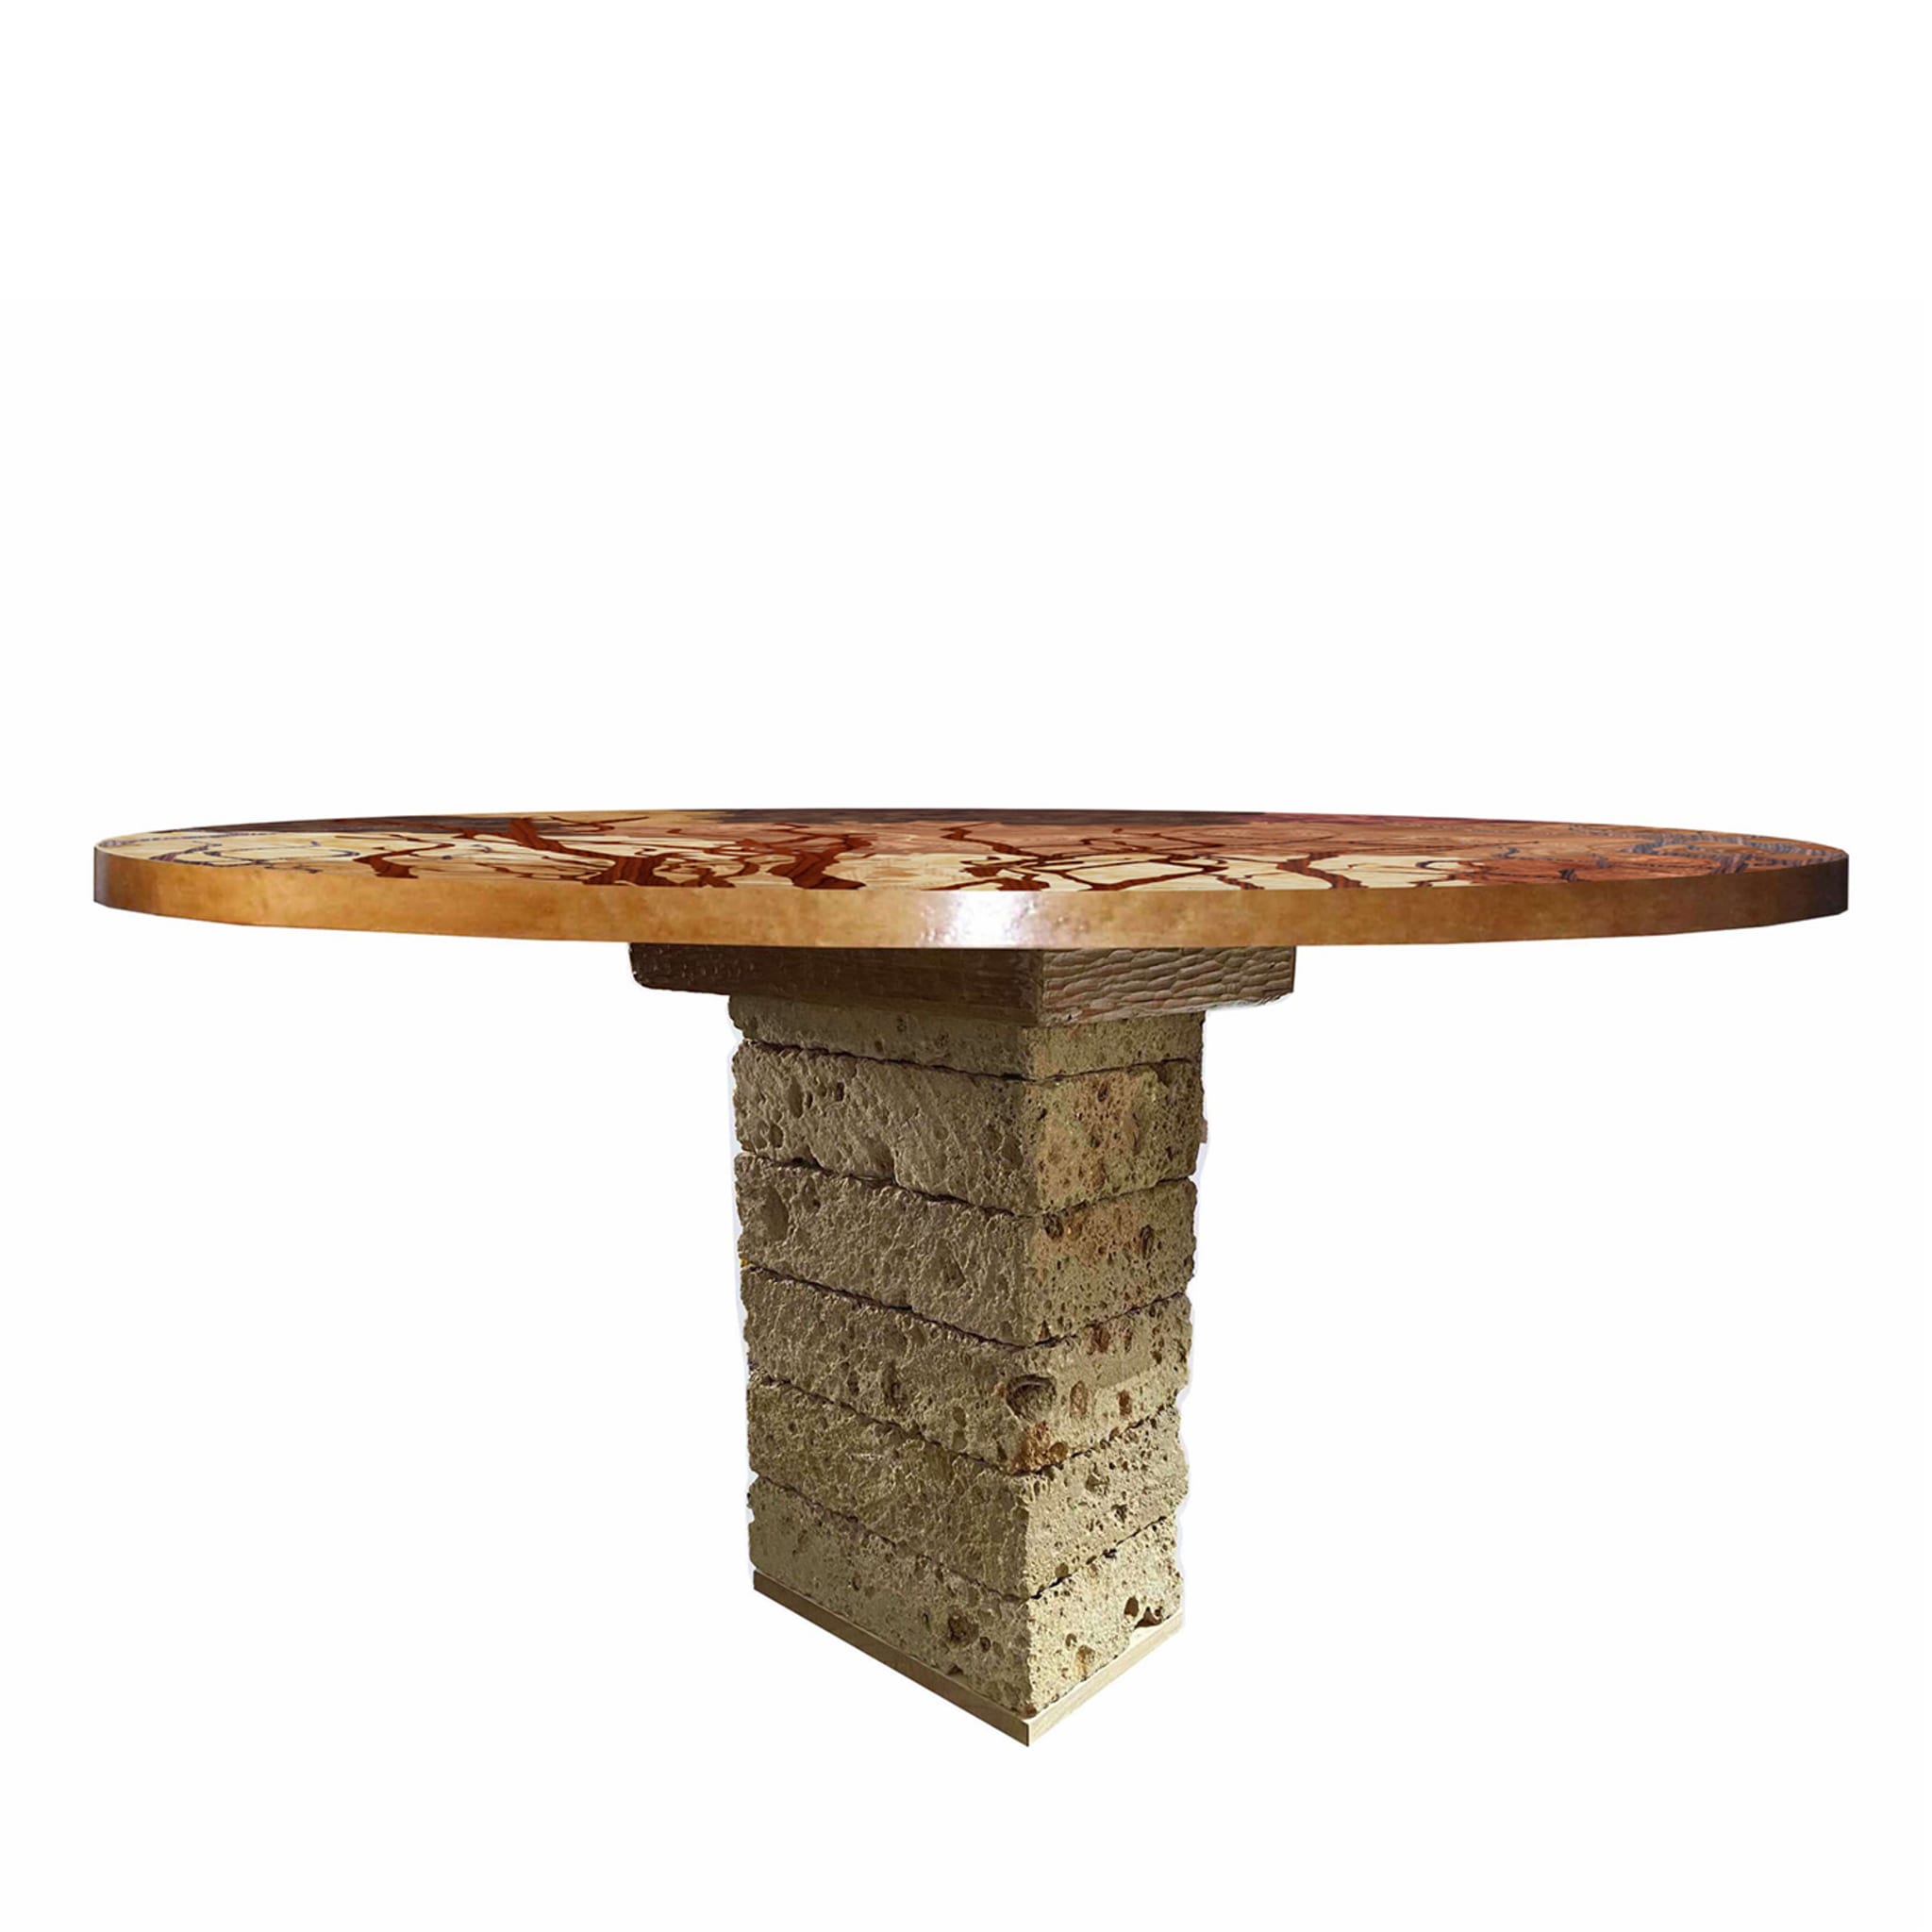 Tarsia Tables Tt2 Round Polychrome Table by Mascia Meccani - Alternative view 3